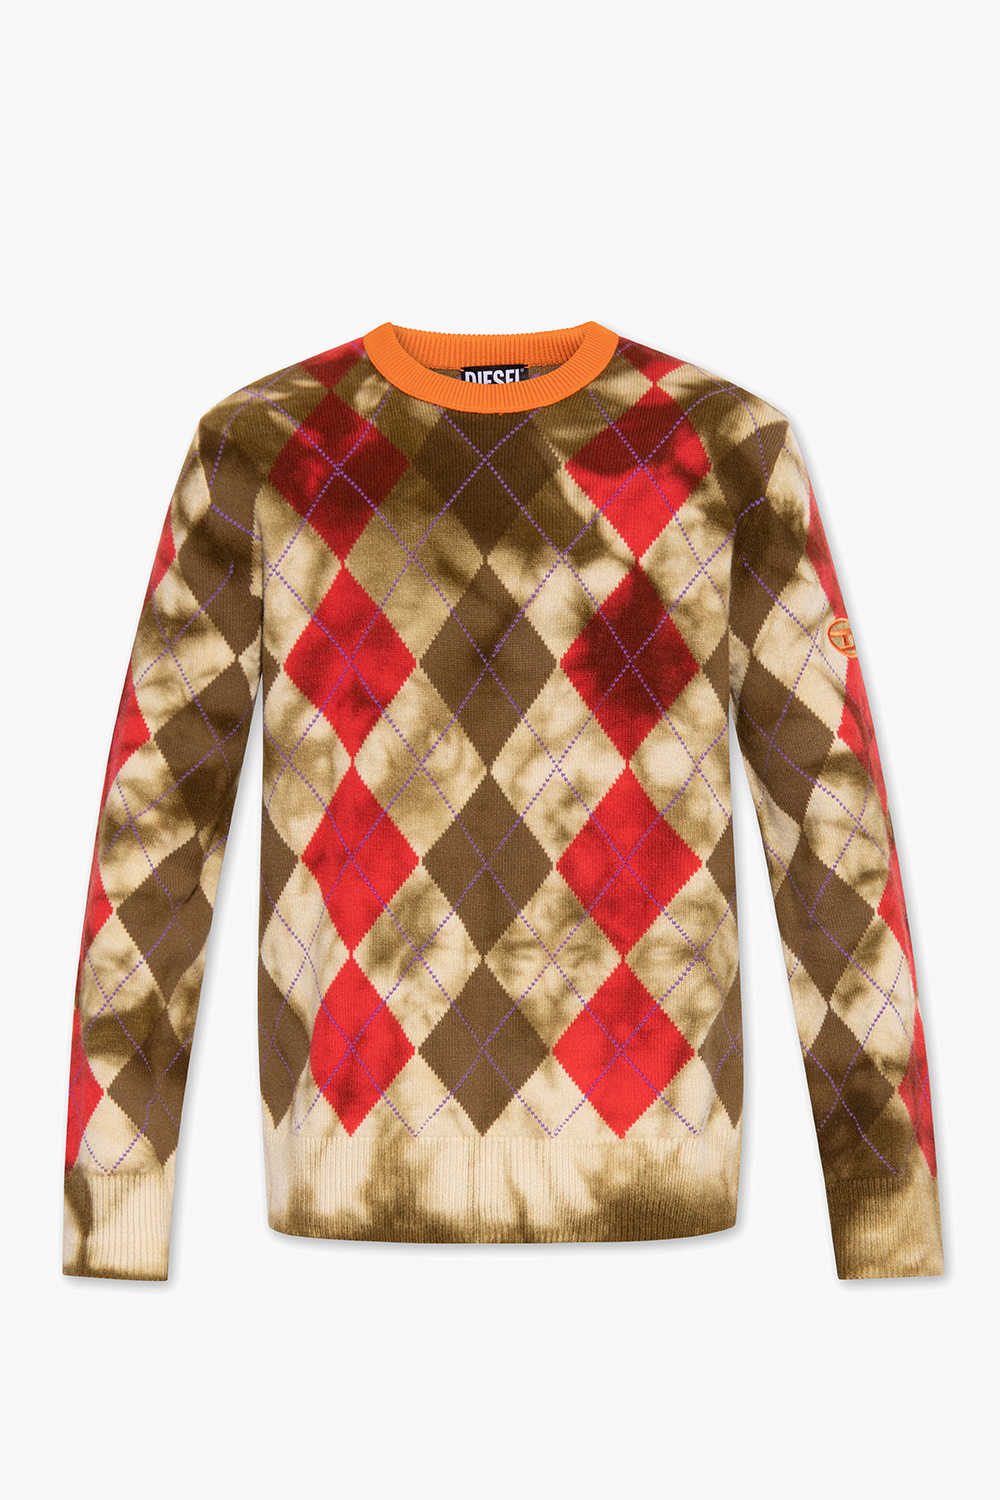 Diesel ‘K-AIRO’ sweater